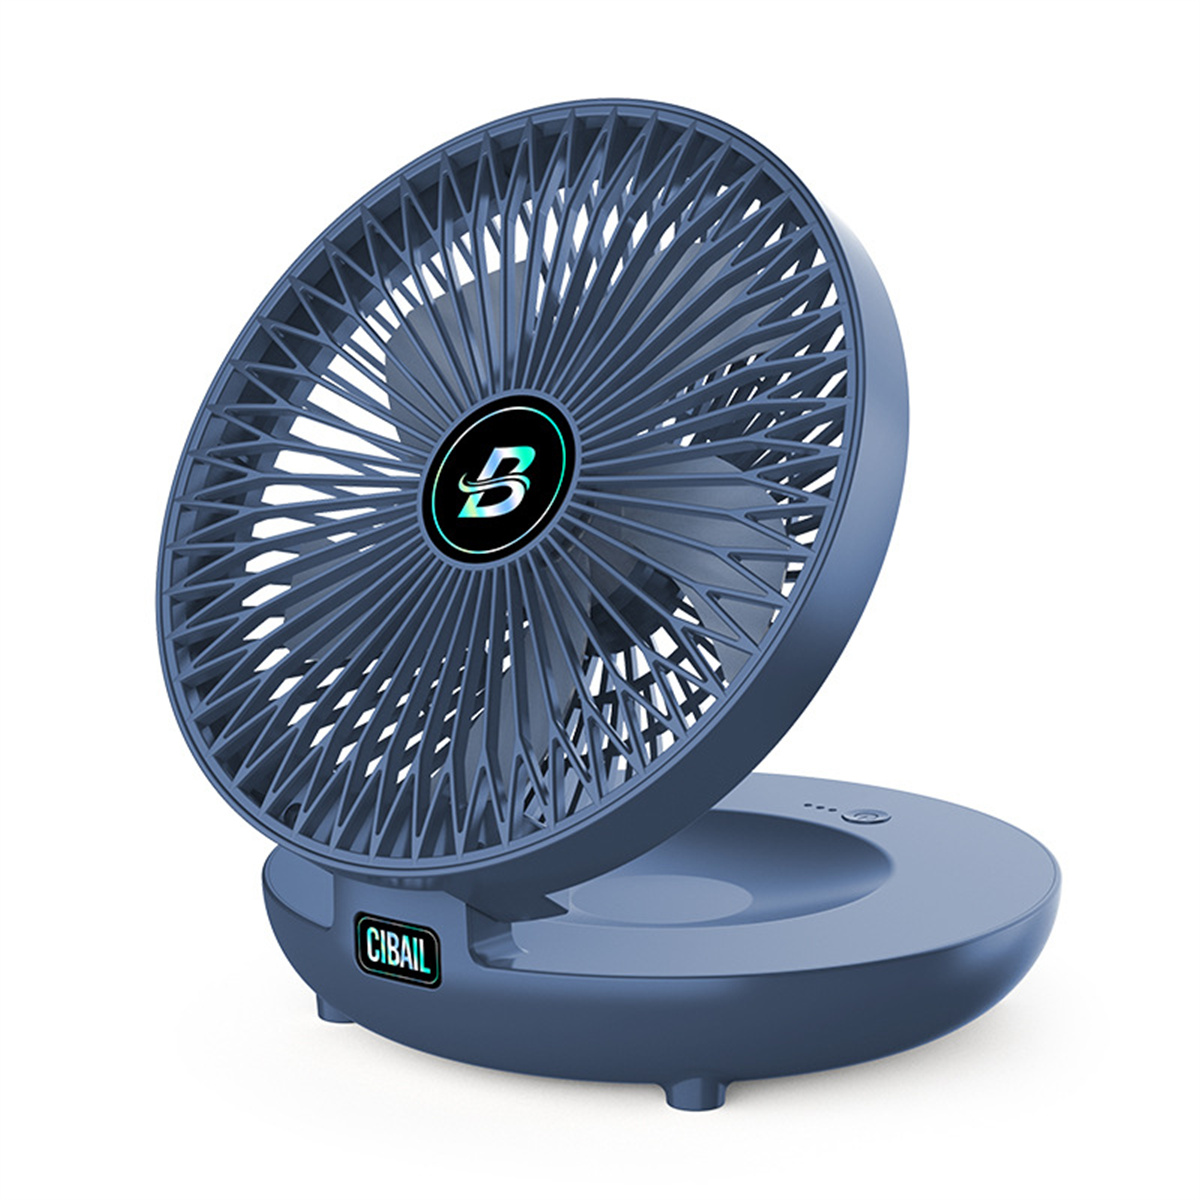 SYNTEK Fan blau stumm tragbar Blau Desktop Wind Mini Ventilator hohe Schlafsaal wiederaufladbar Hause USB